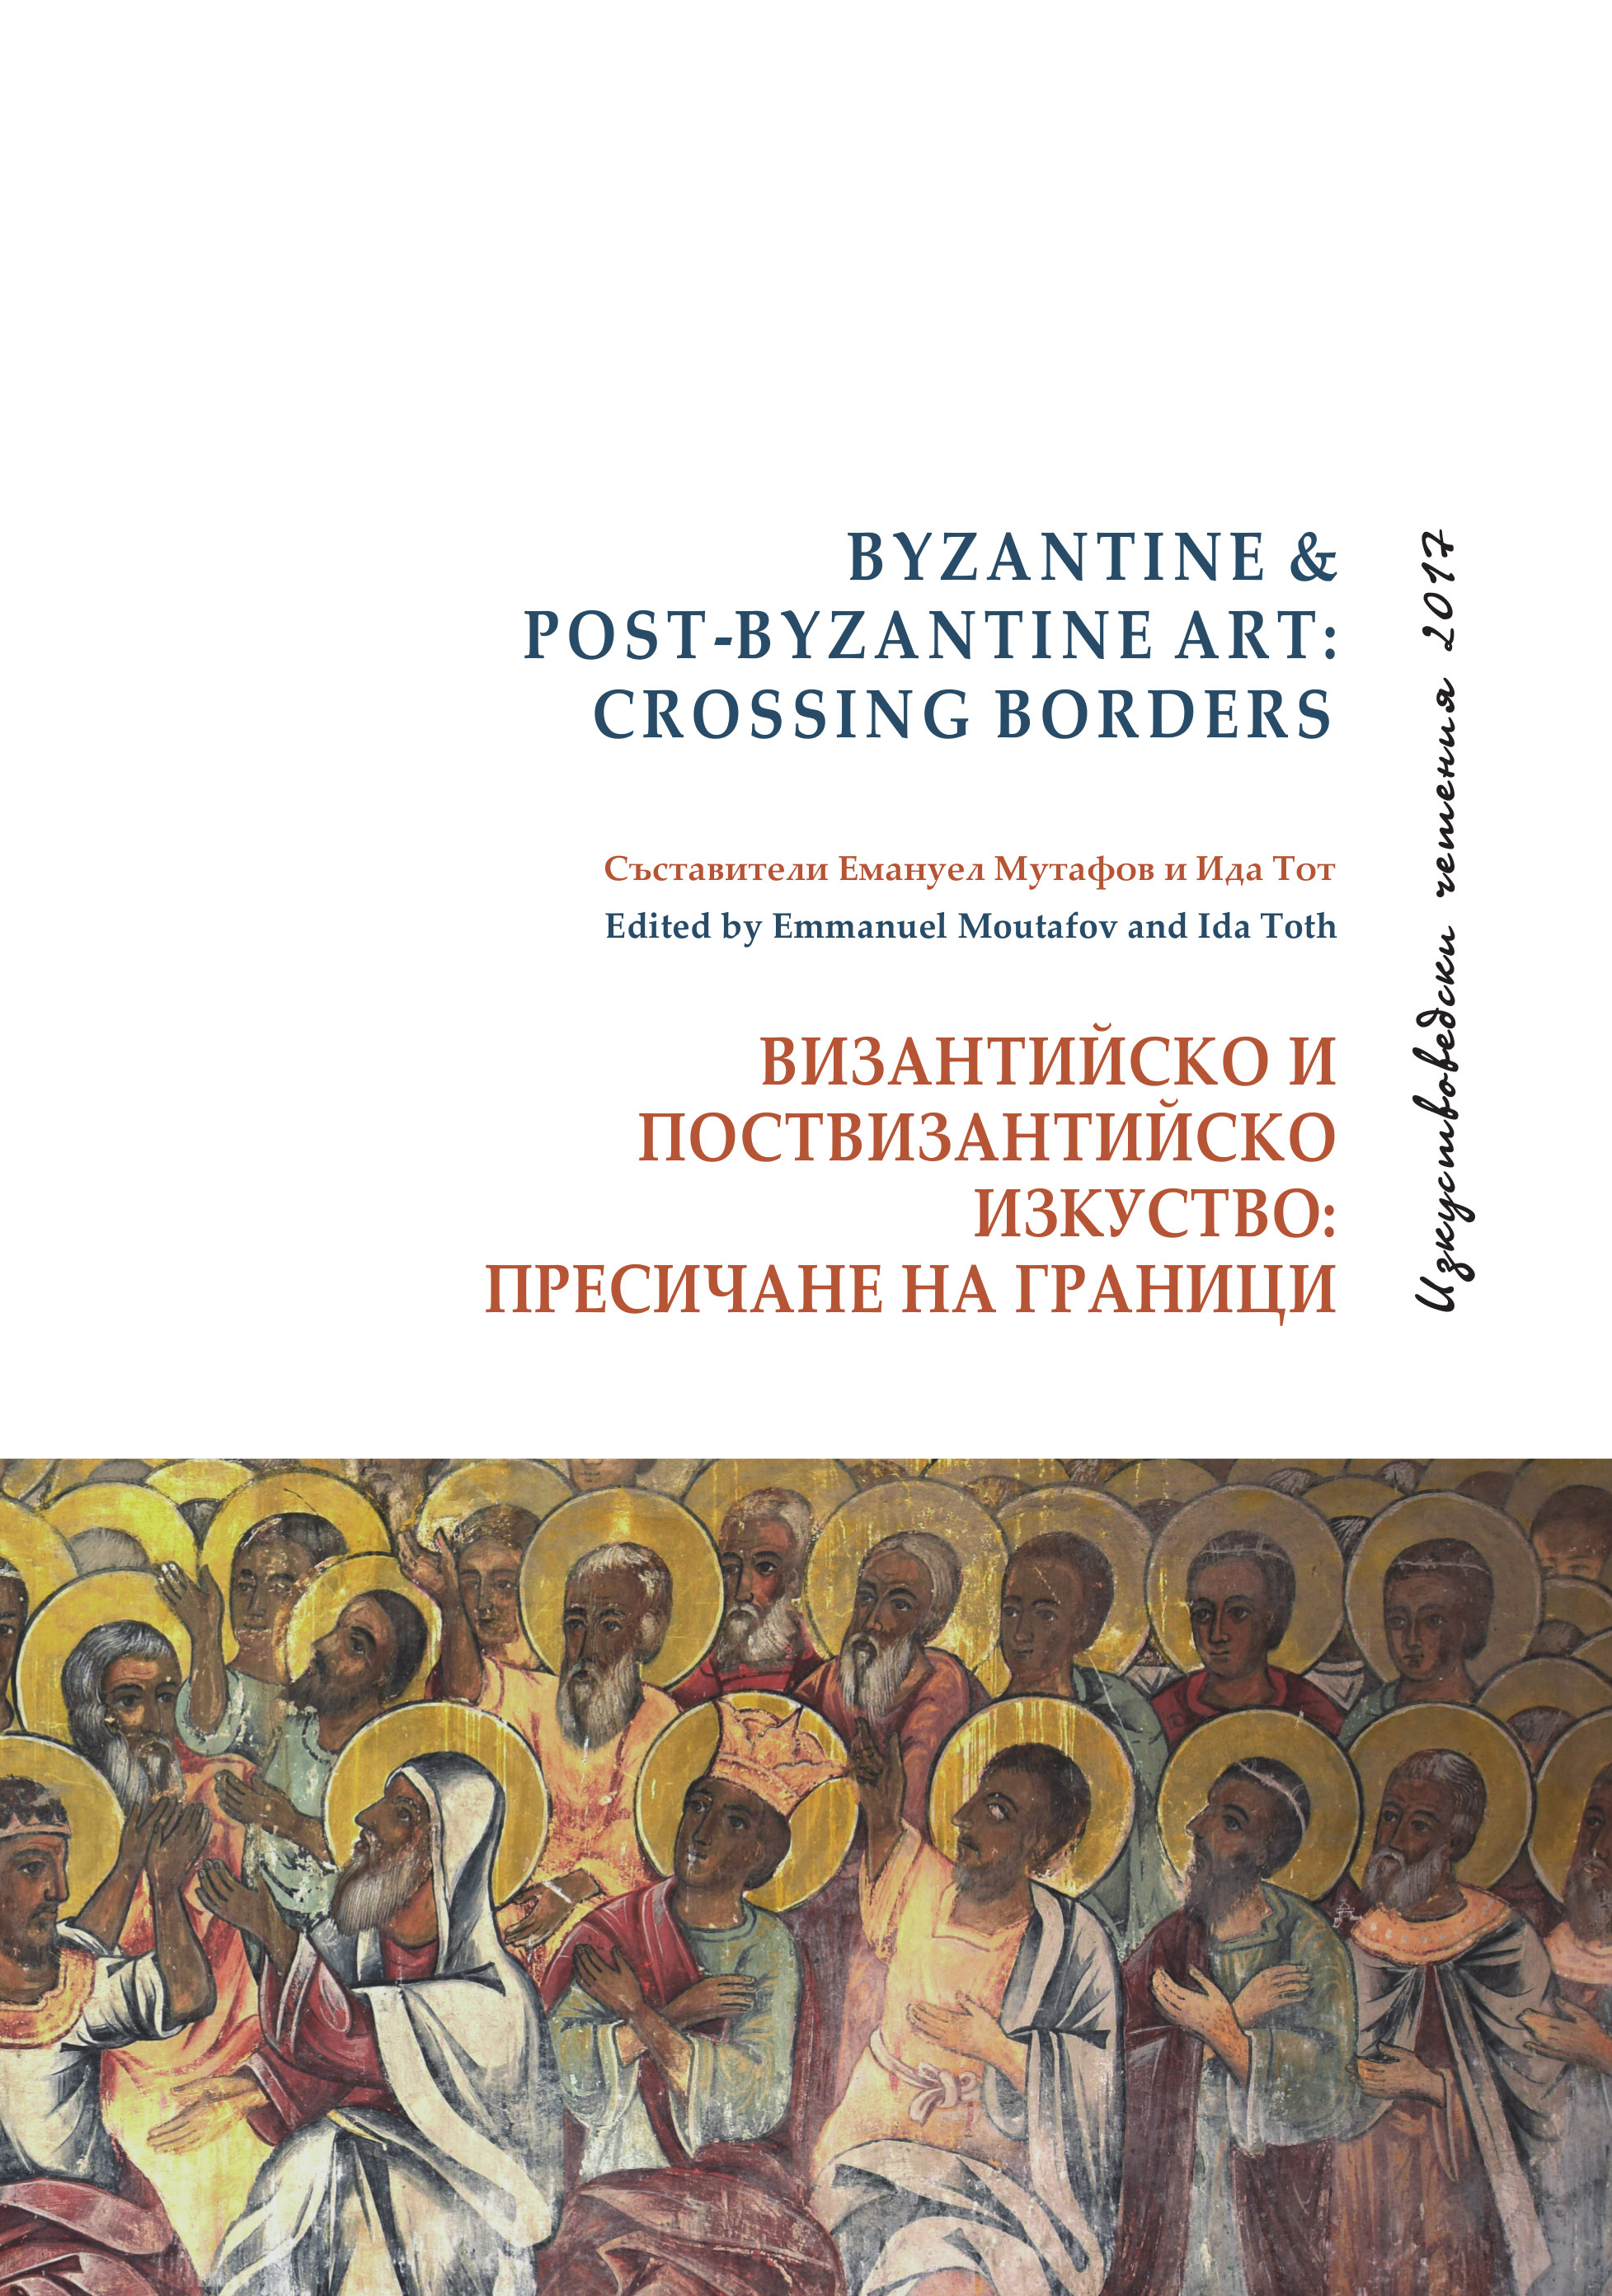 Byzantine and Post-Byzantine Art: Crossing Borders, Exploring Boundaries